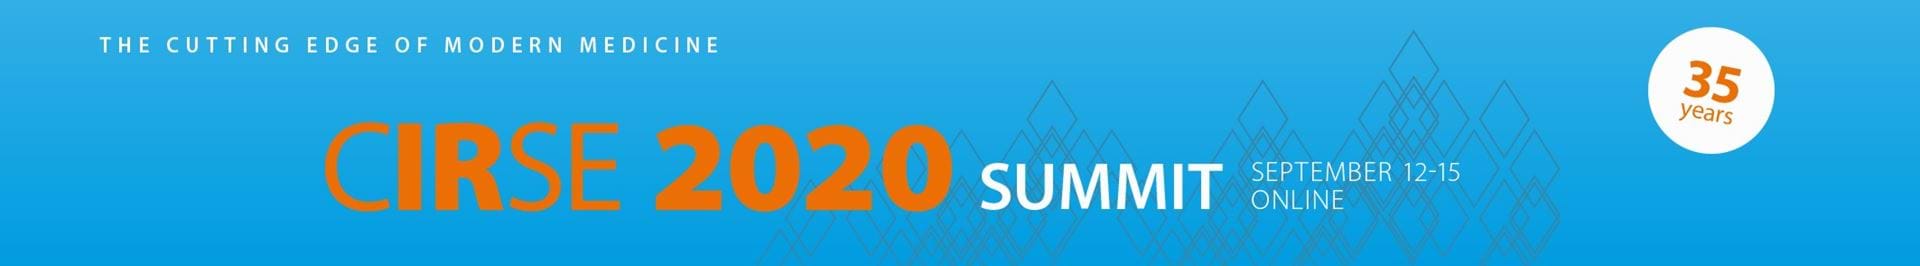 CIRSE 2020 Summit banner. Kilde: cirse.org/